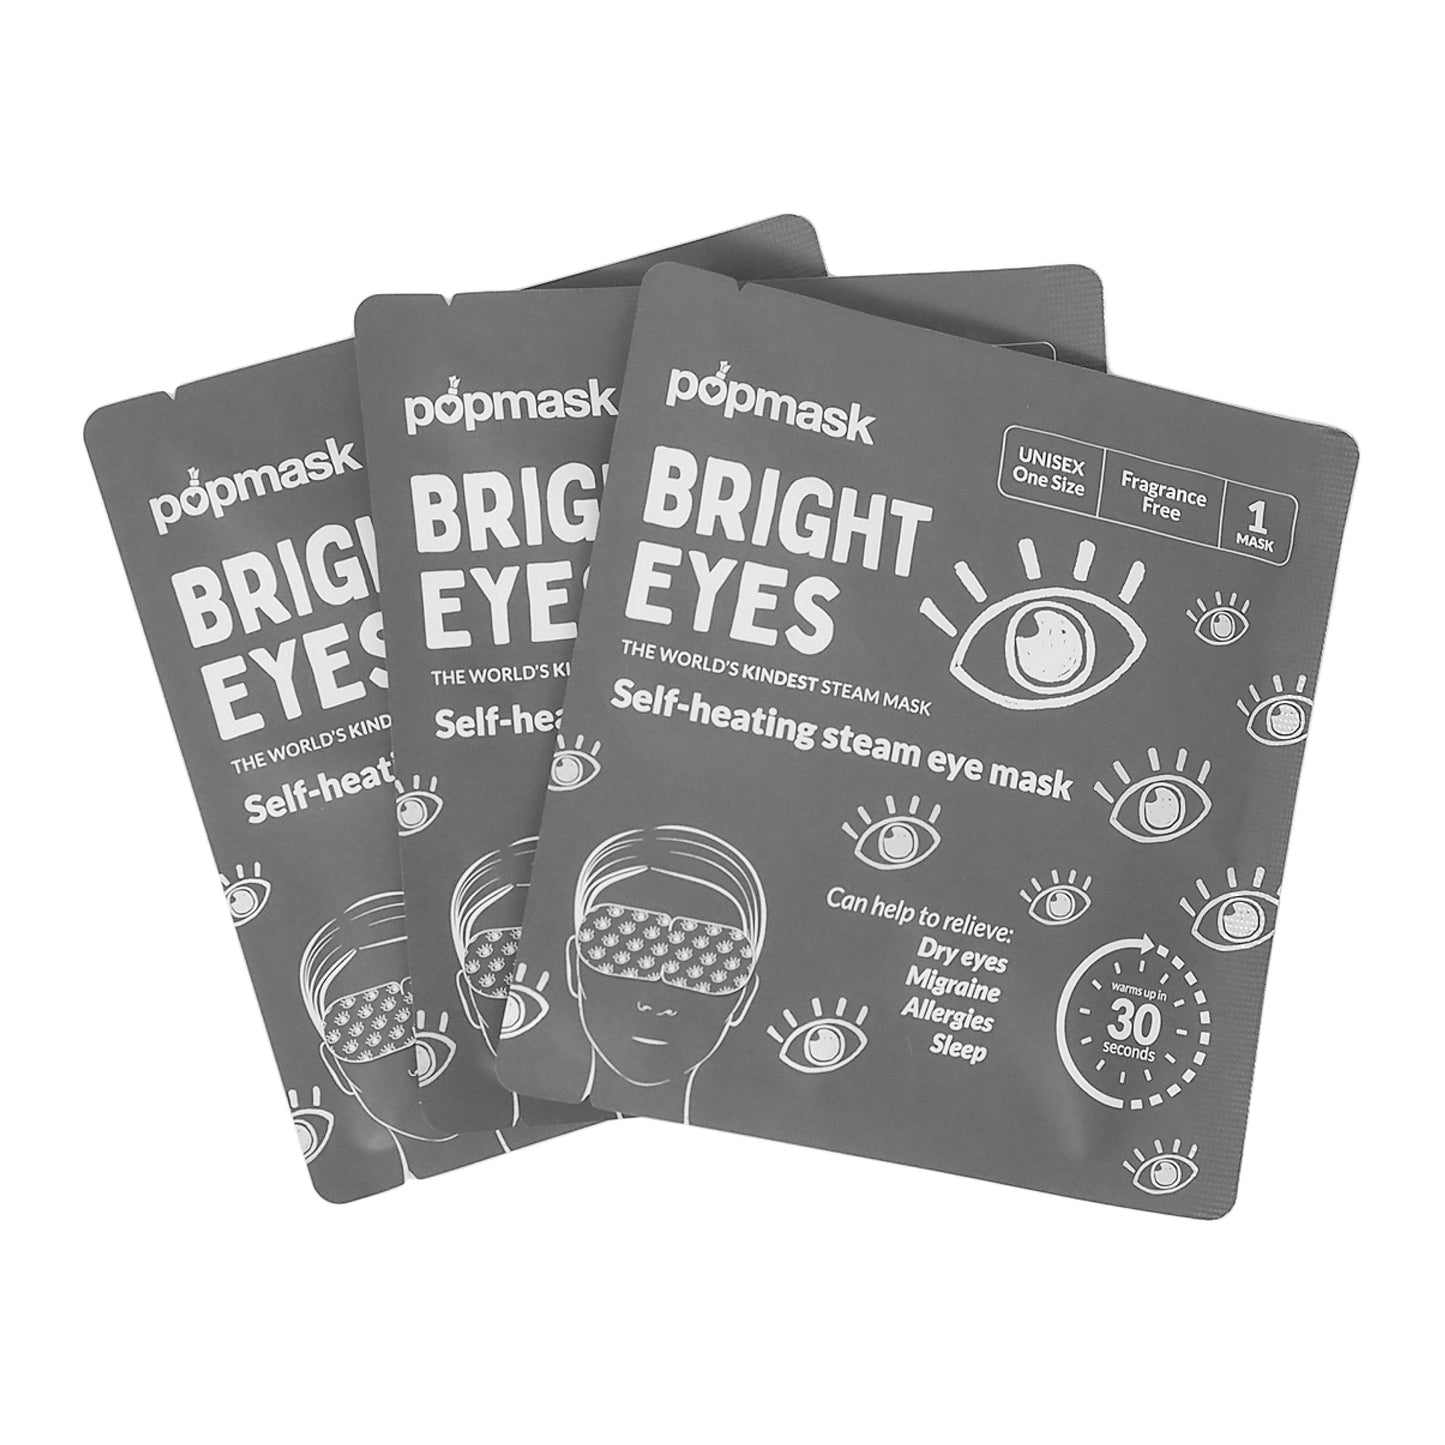 Bright Eyes Fragrance-Free Self-Warming Sleep Masks (3 Pack)